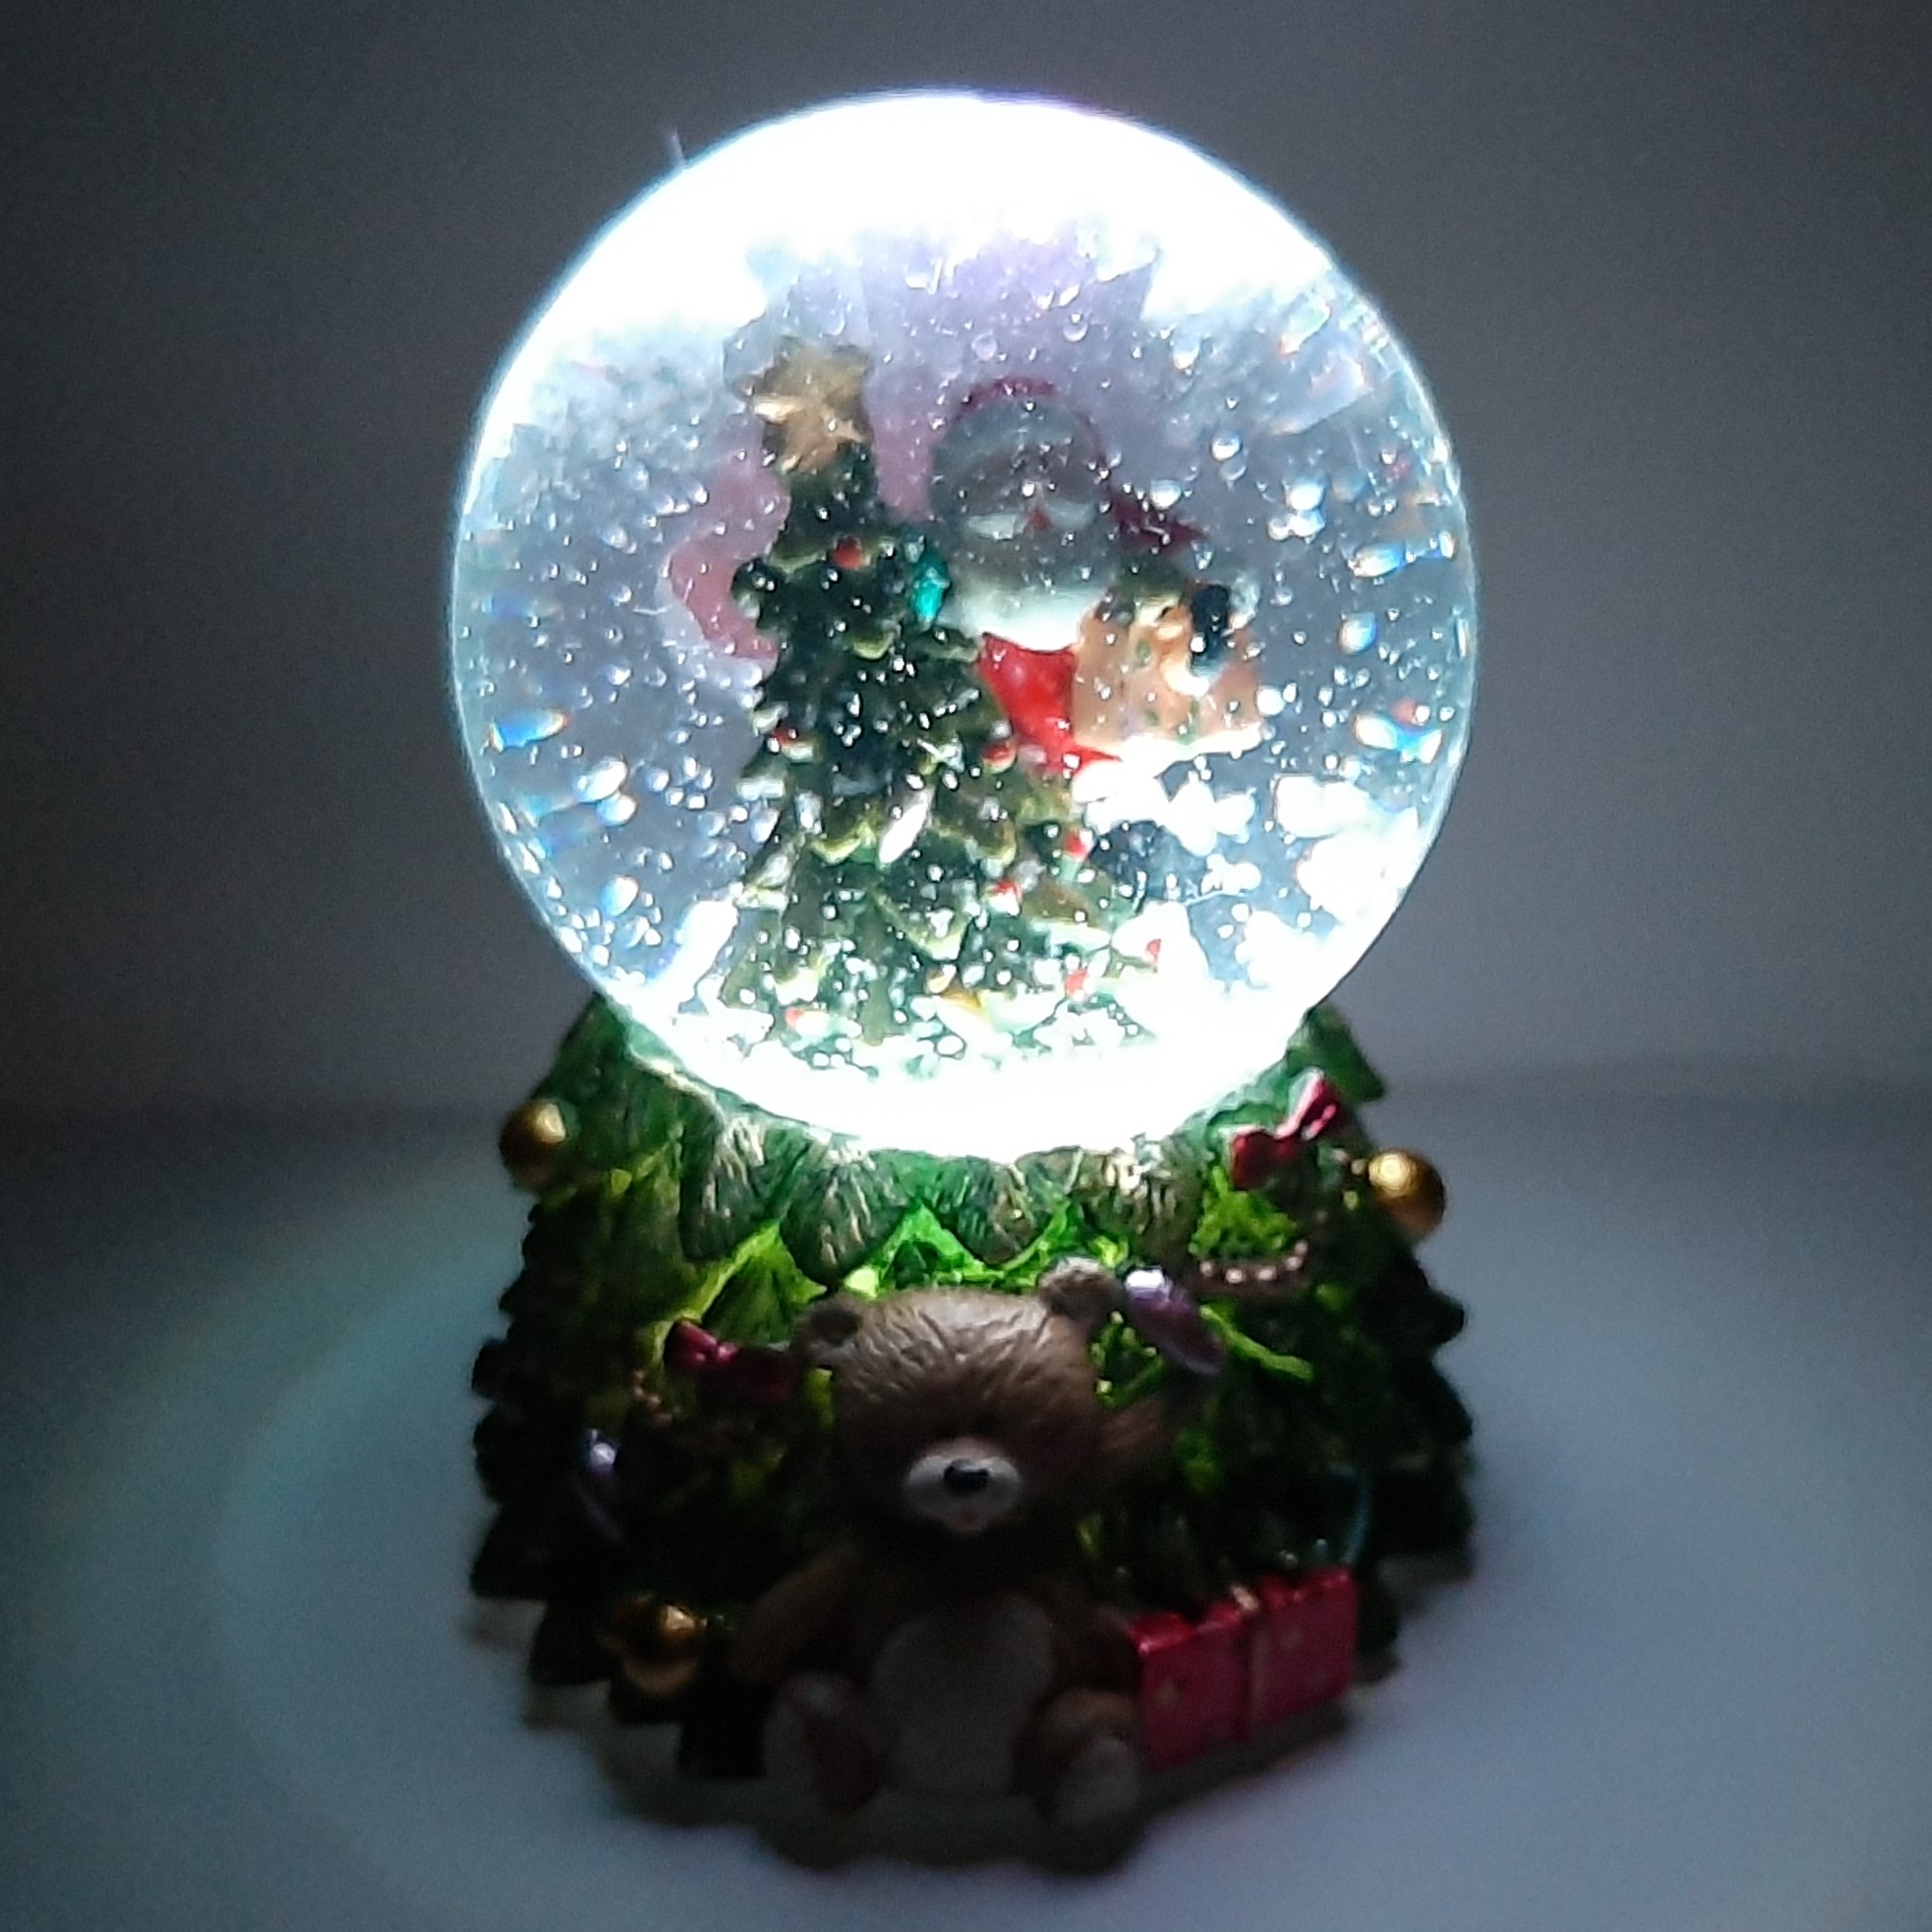 Sneeuwbol kerstboom met met led verlichting 8cm hoog